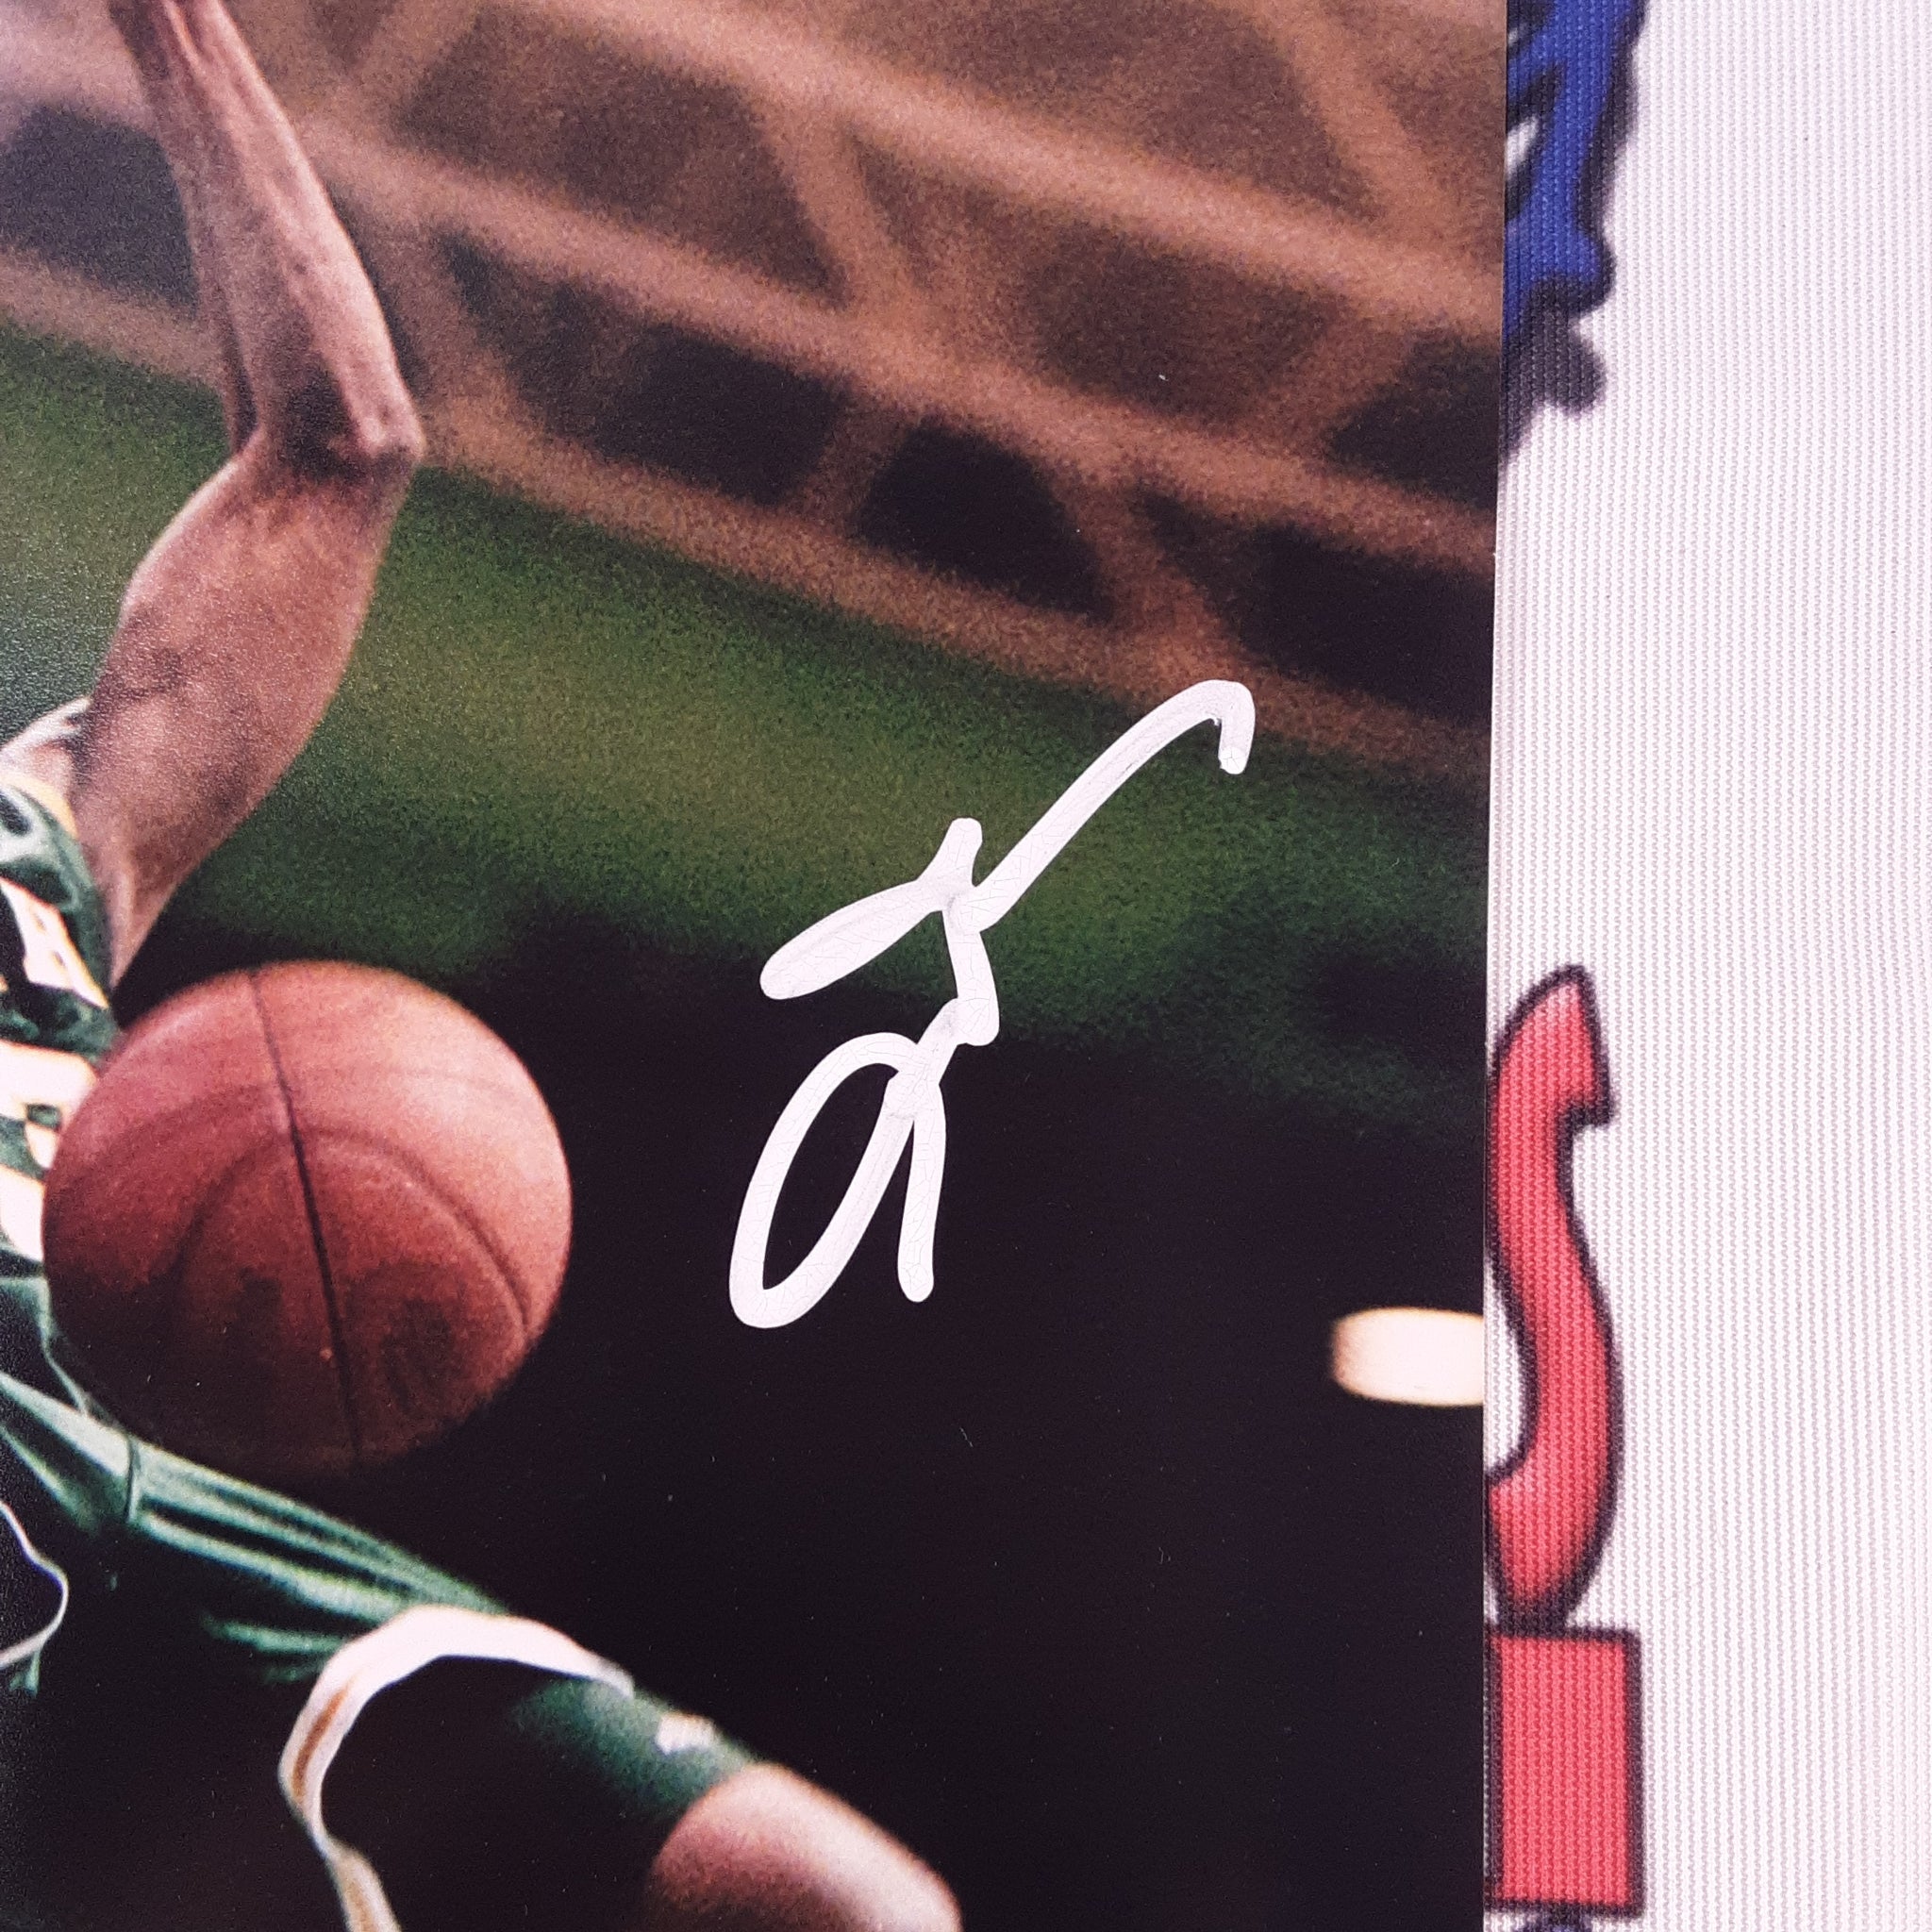 Allen Iverson Signed 76ers Finals Step Over 8x10 Photo (JSA COA)